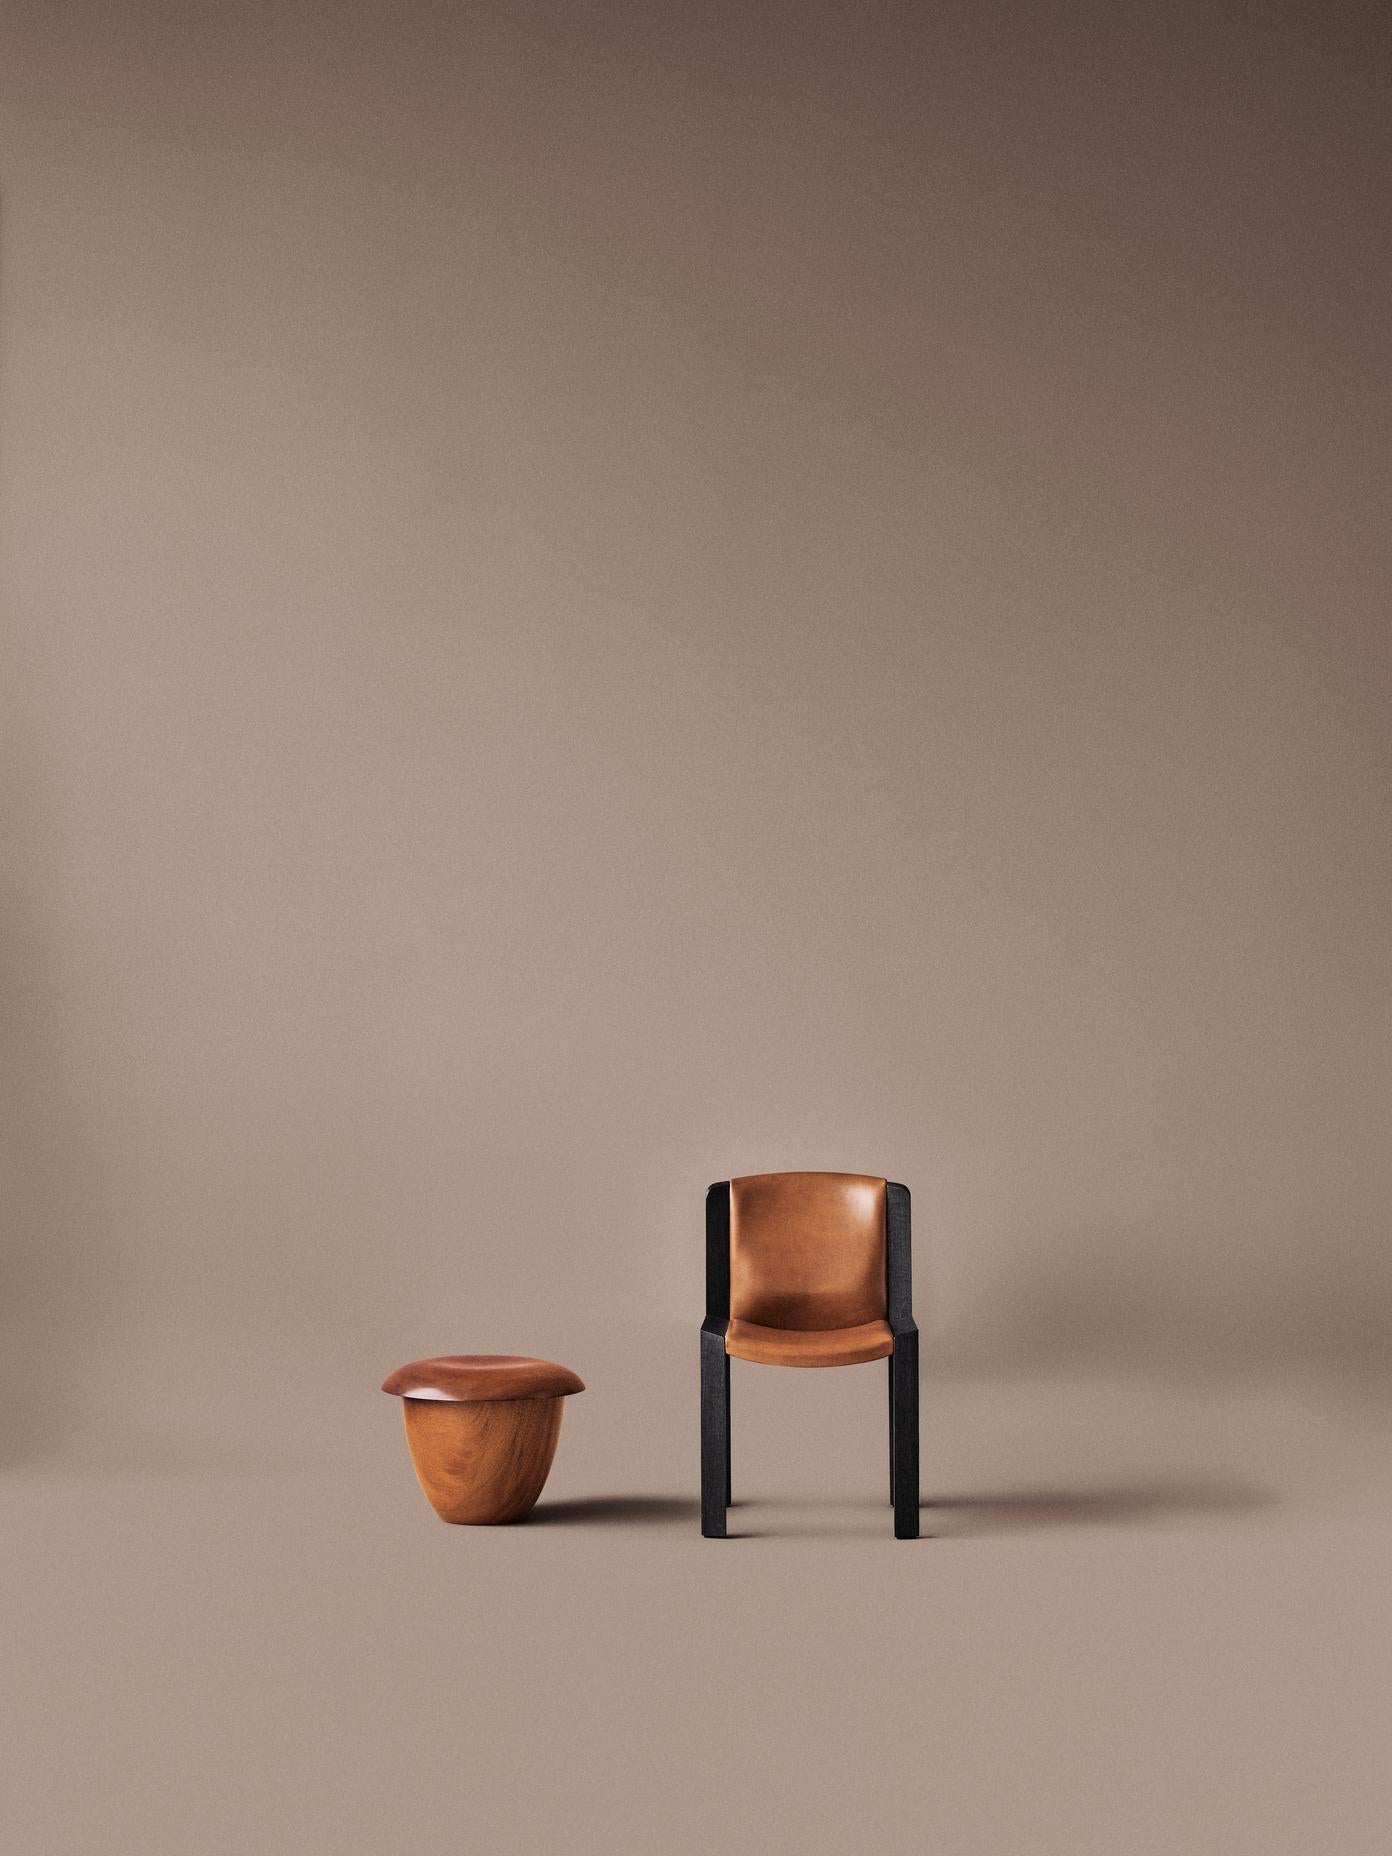 Contemporary Joe Colombo 'Chair 300' by Karakter